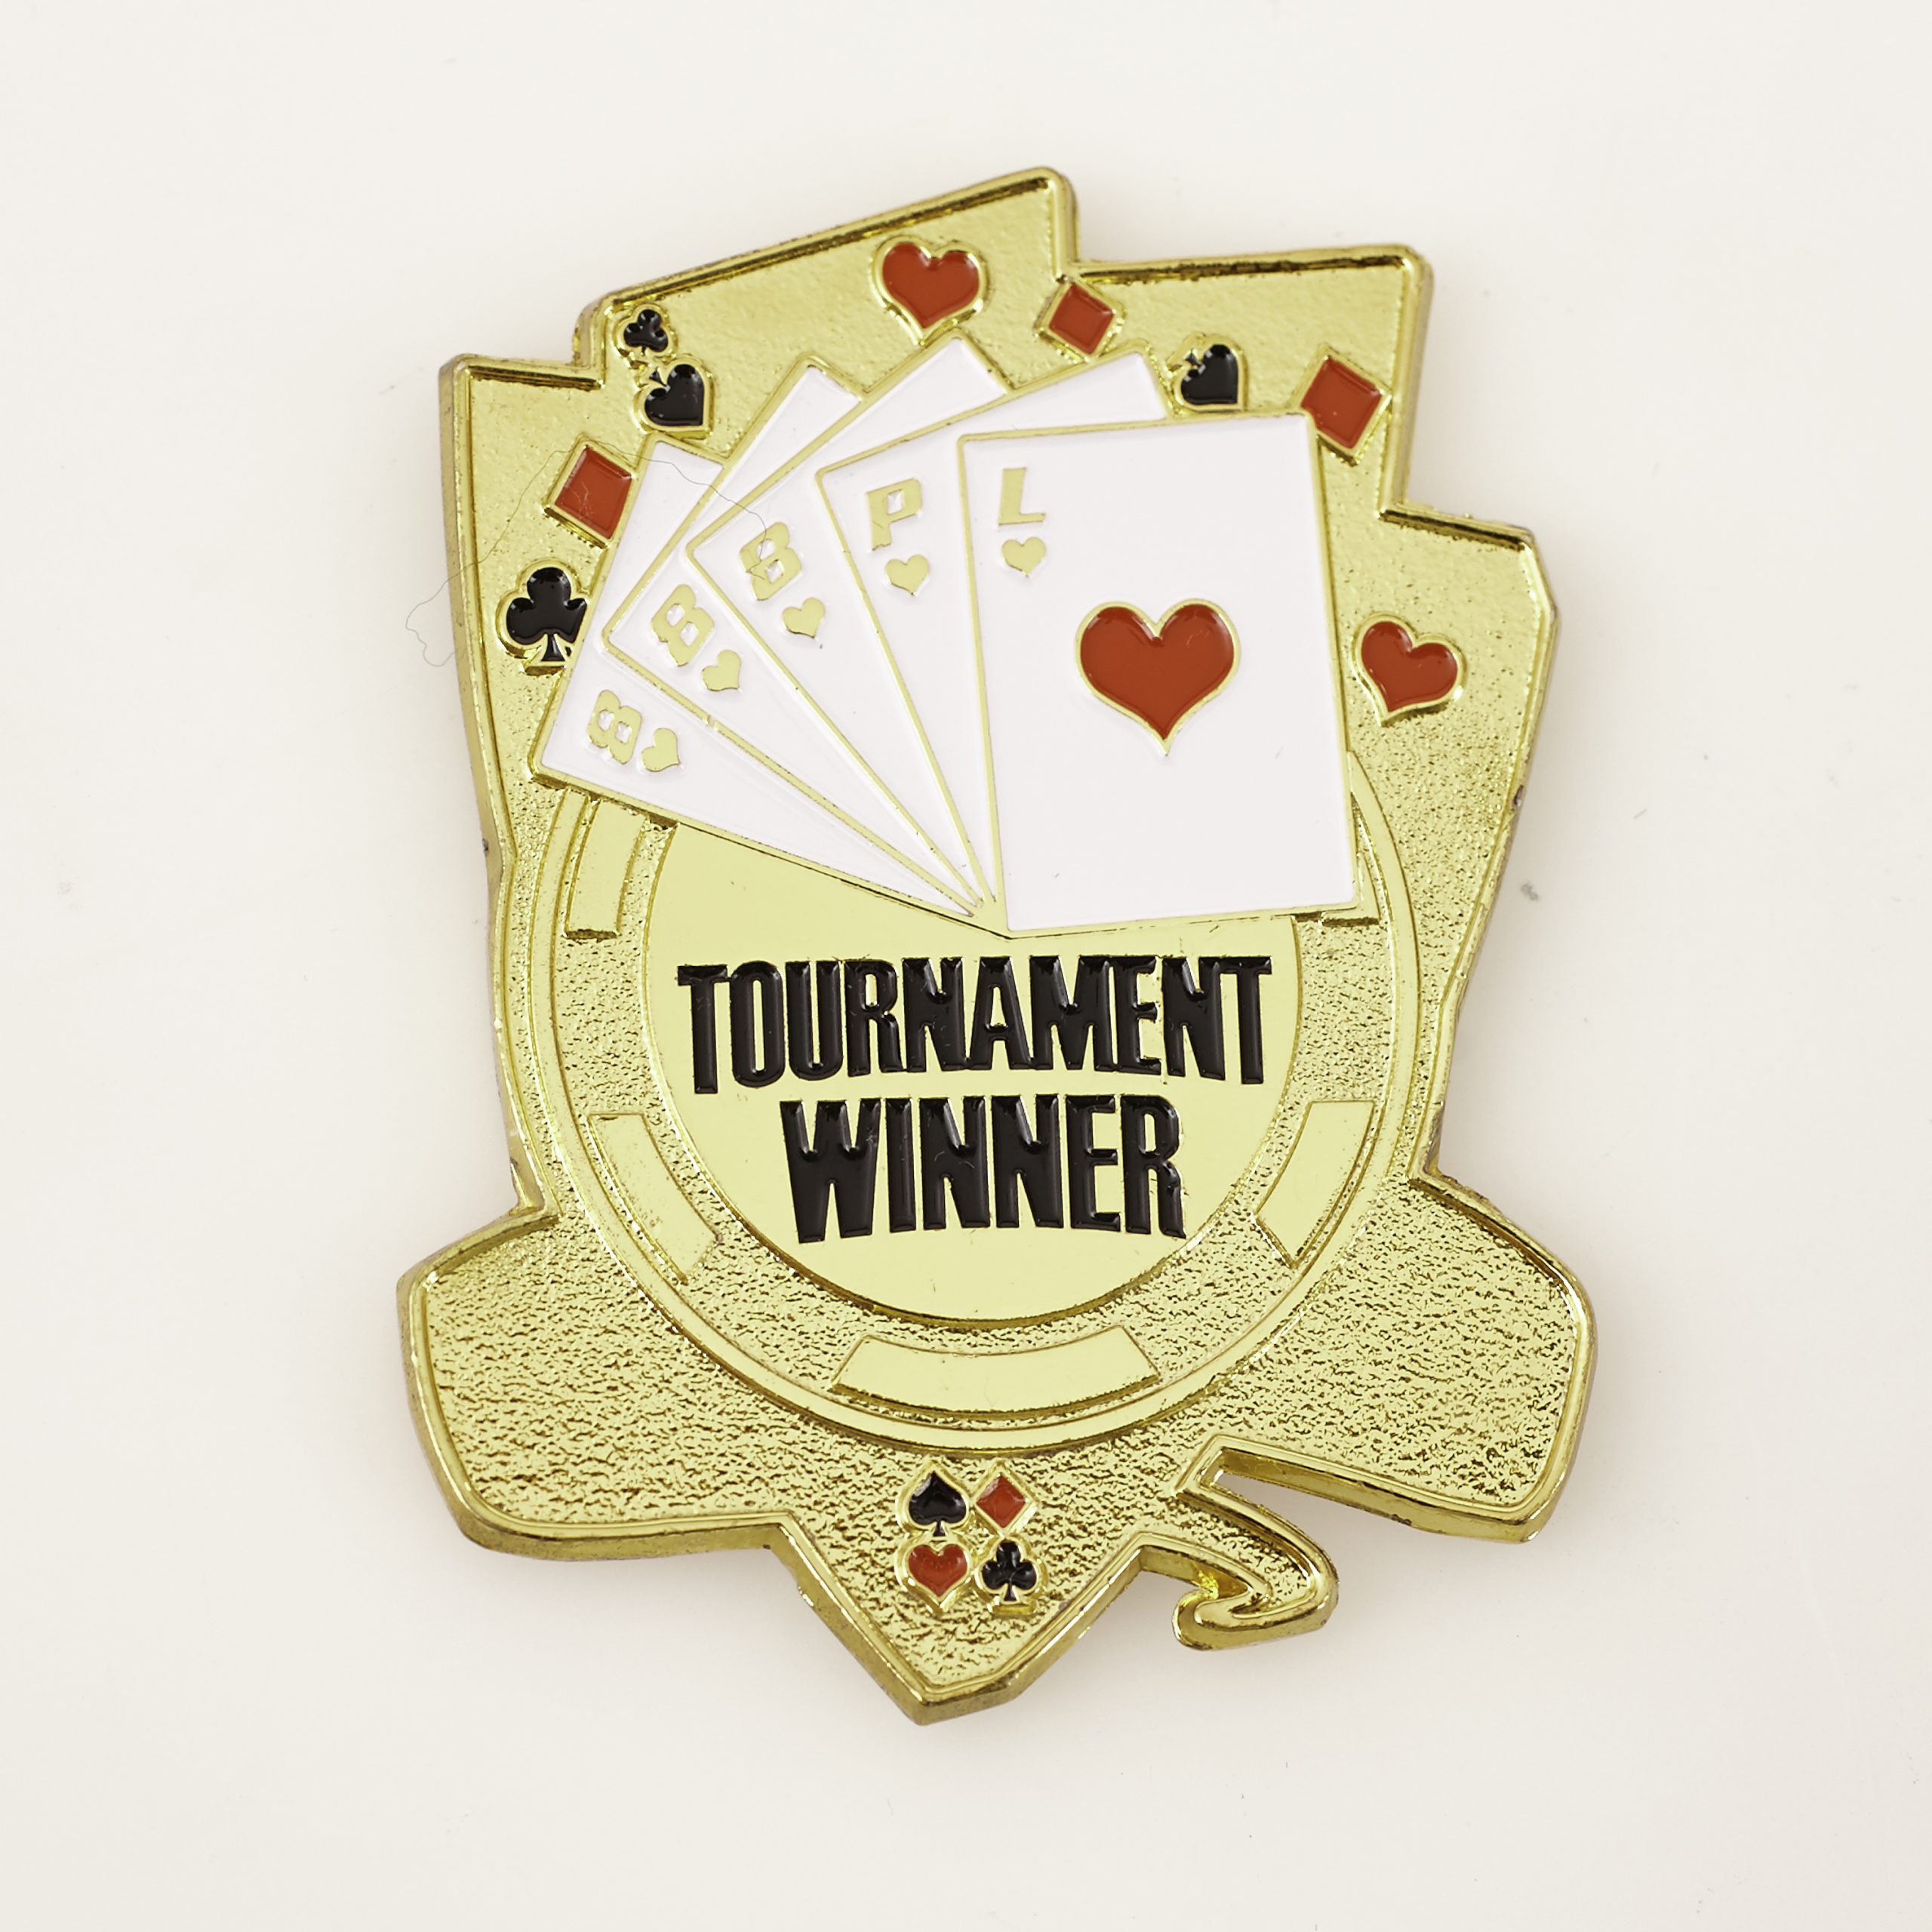 888 POKER LEAGUE, TOURNAMENT WINNER, ROYAL FLUSH, Poker Card Guard